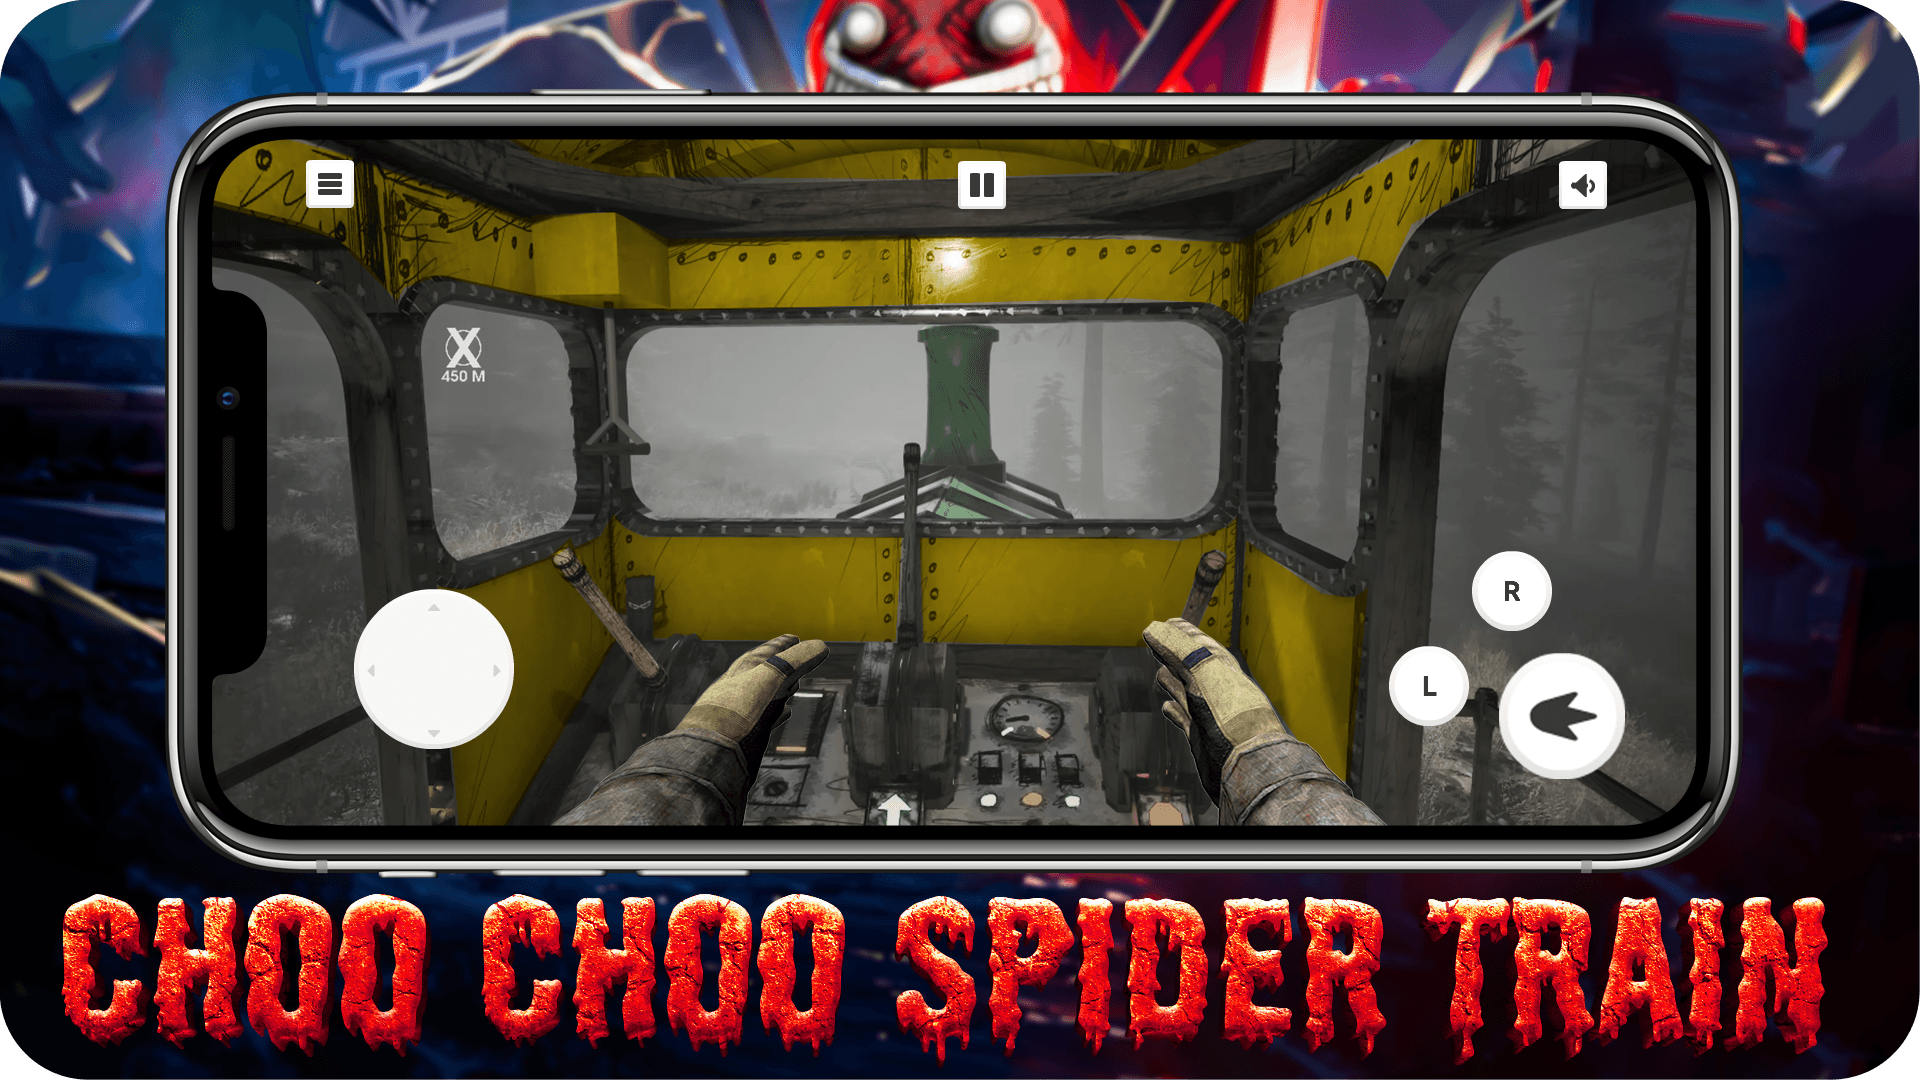 Cho creepy Charle spider train